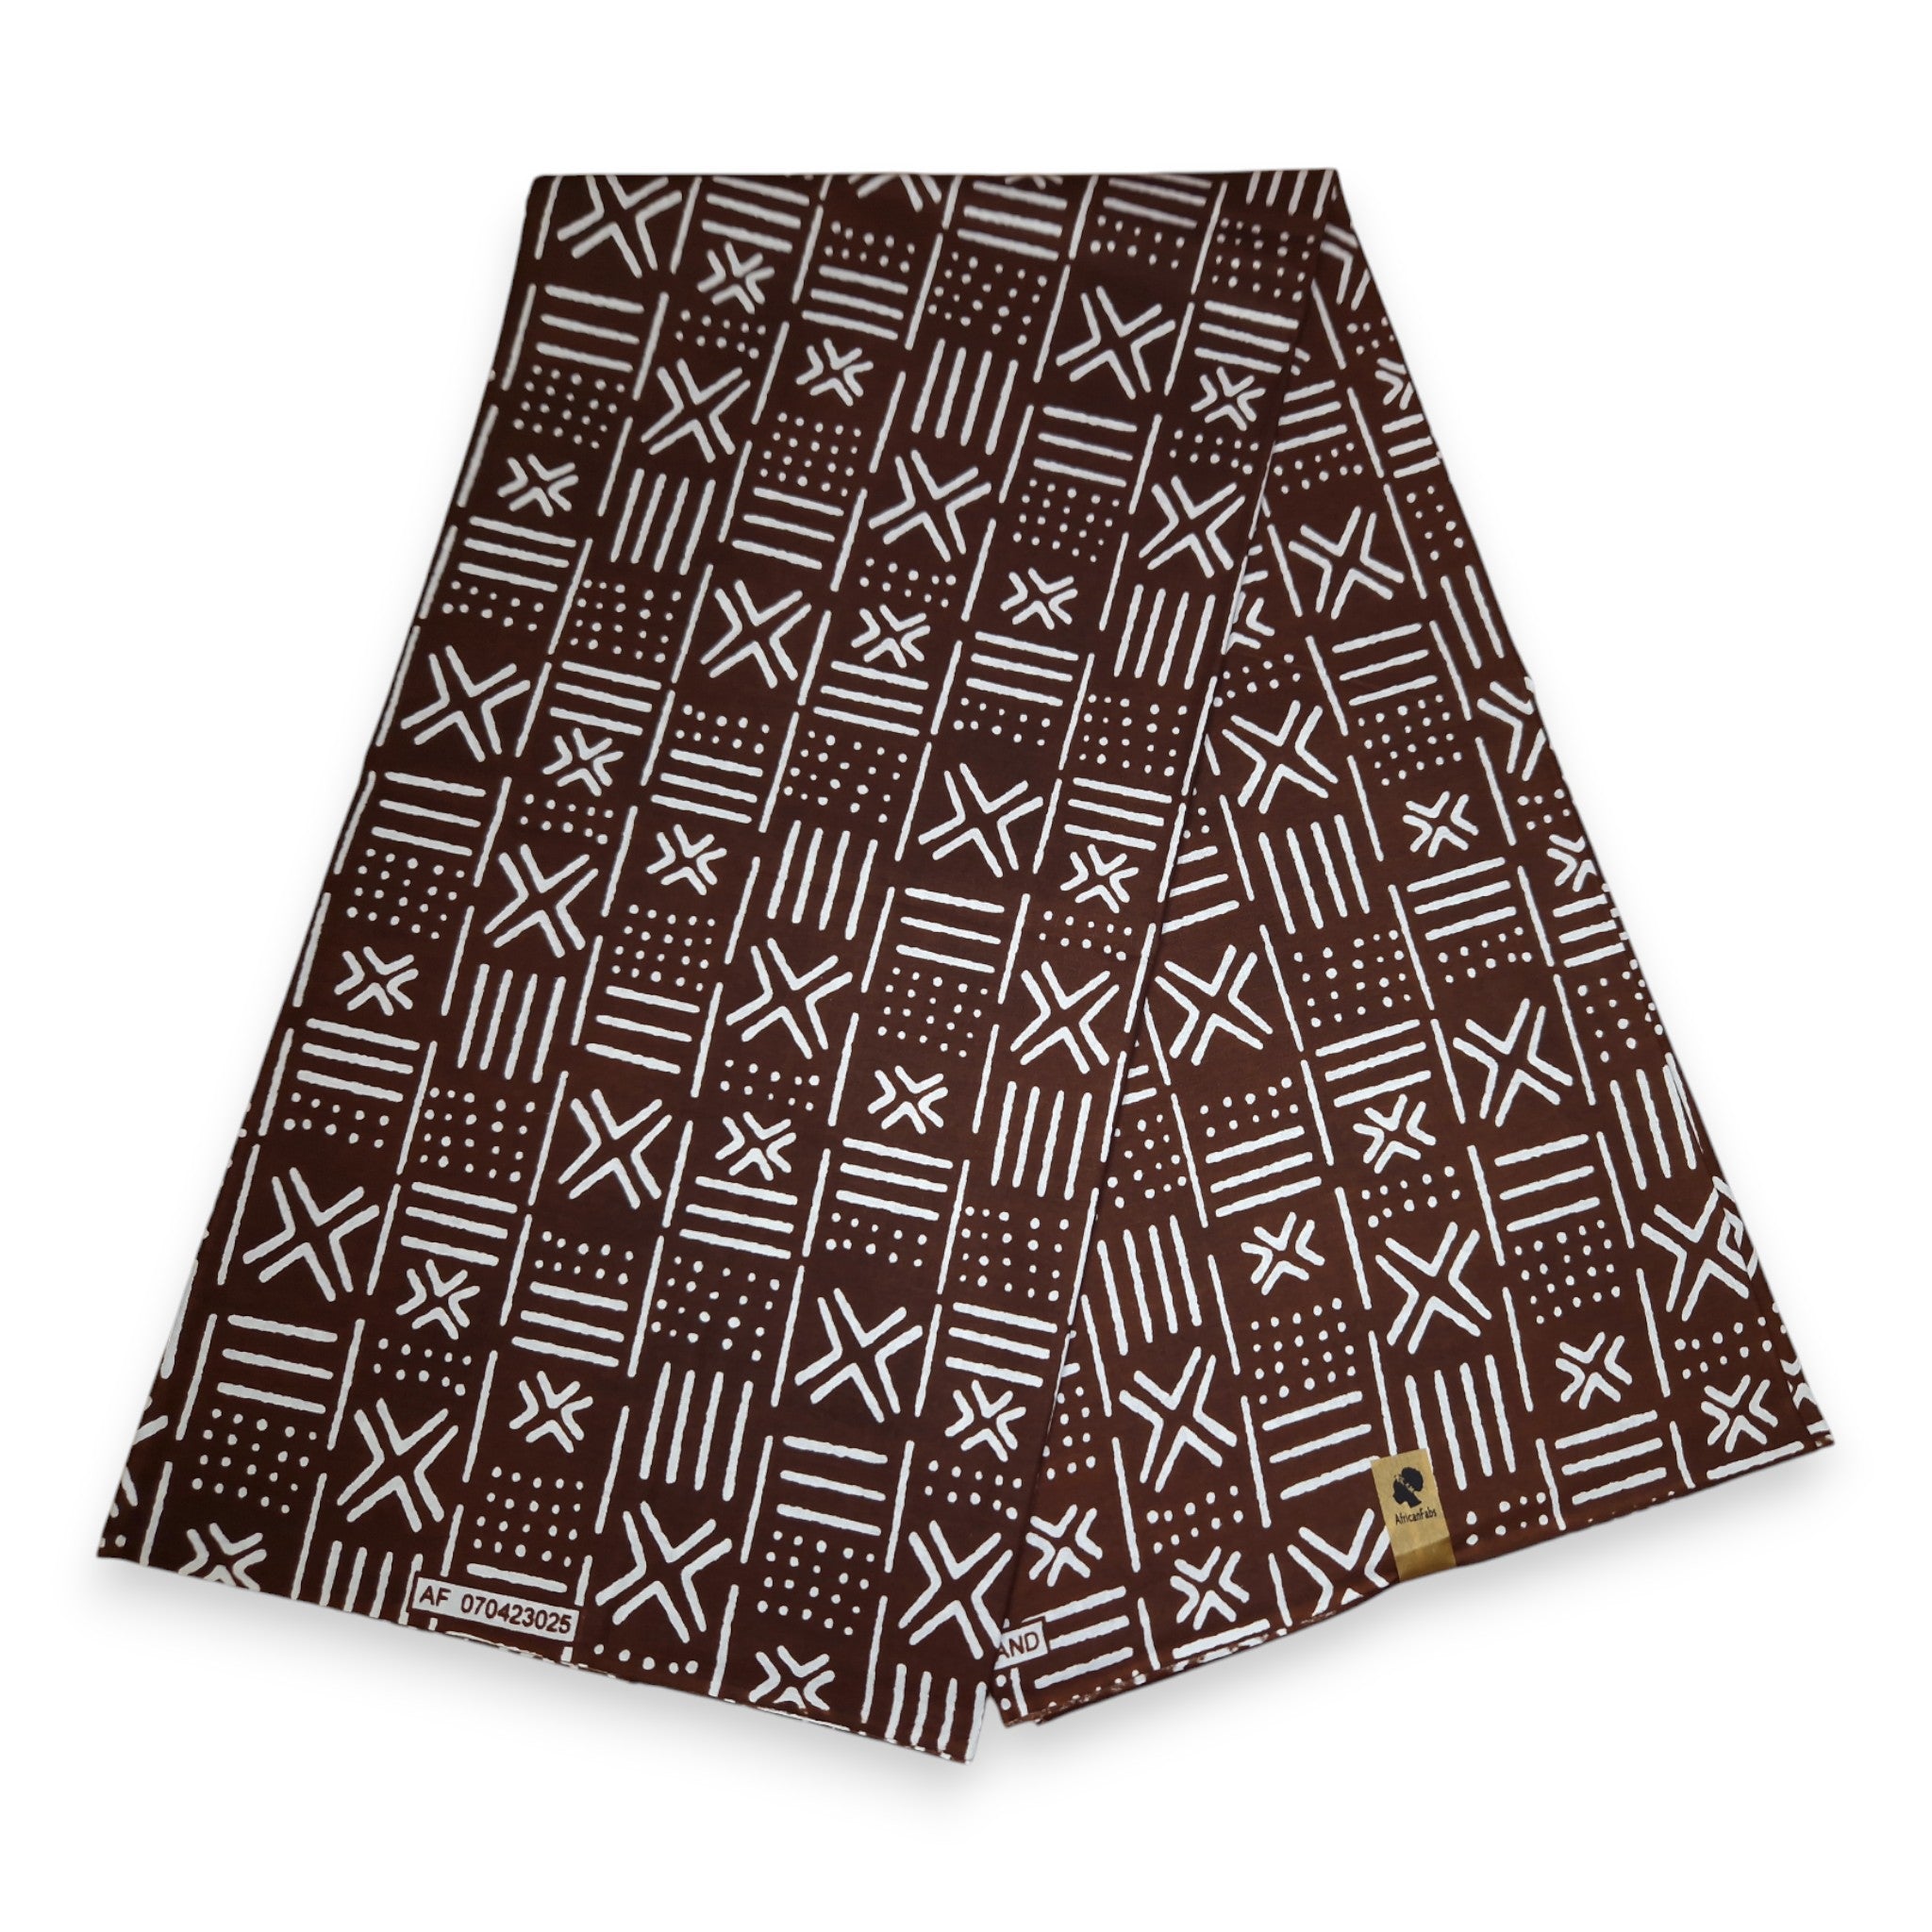 Afrikaanse Bruine X Bogolan / Mud cloth print stof - Traditioneel uit Mali 100% katoen